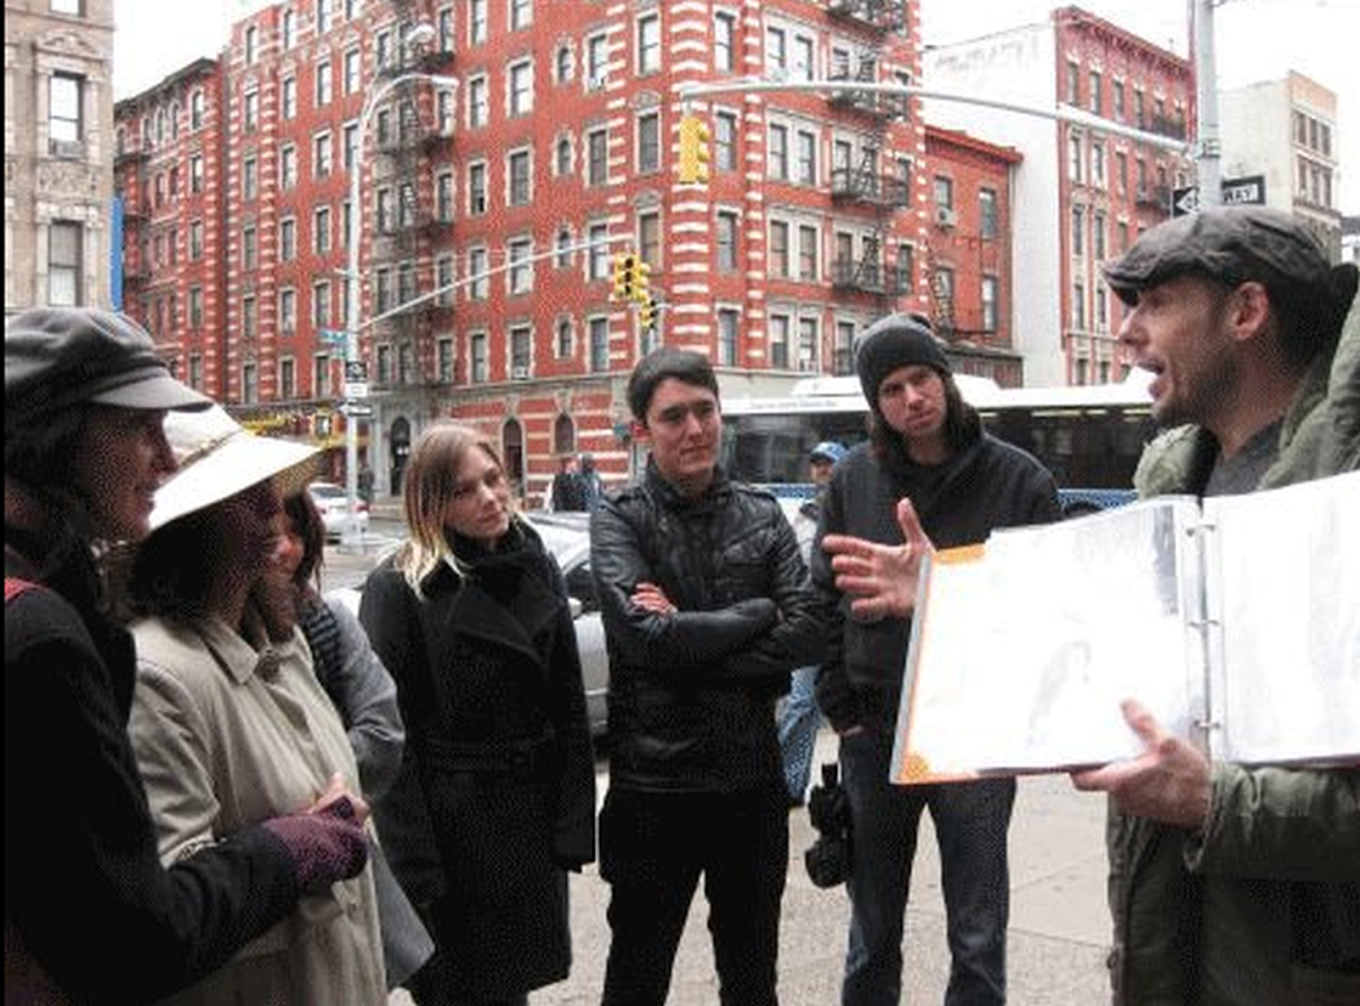 Lower East Side History Project (walking tours)